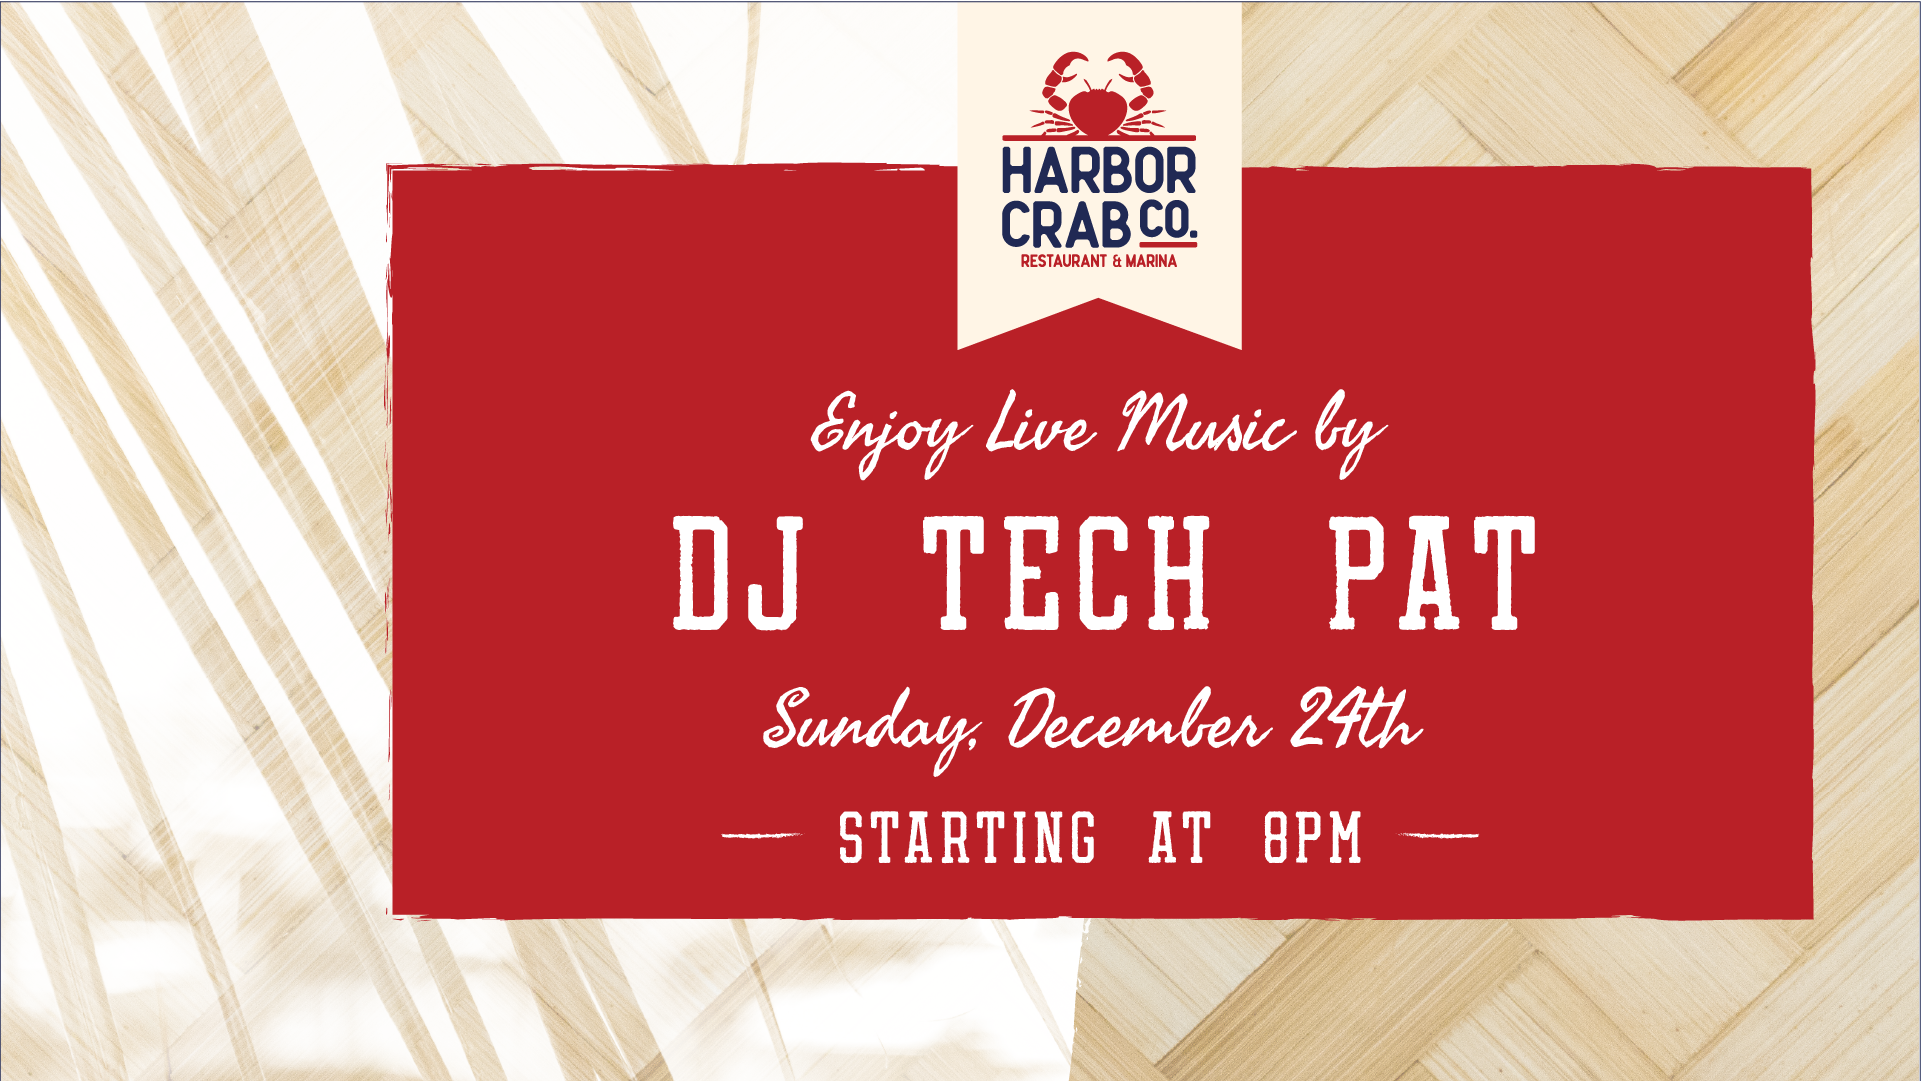 Christmas Eve with DJ Tech Pat at 8:00pm.